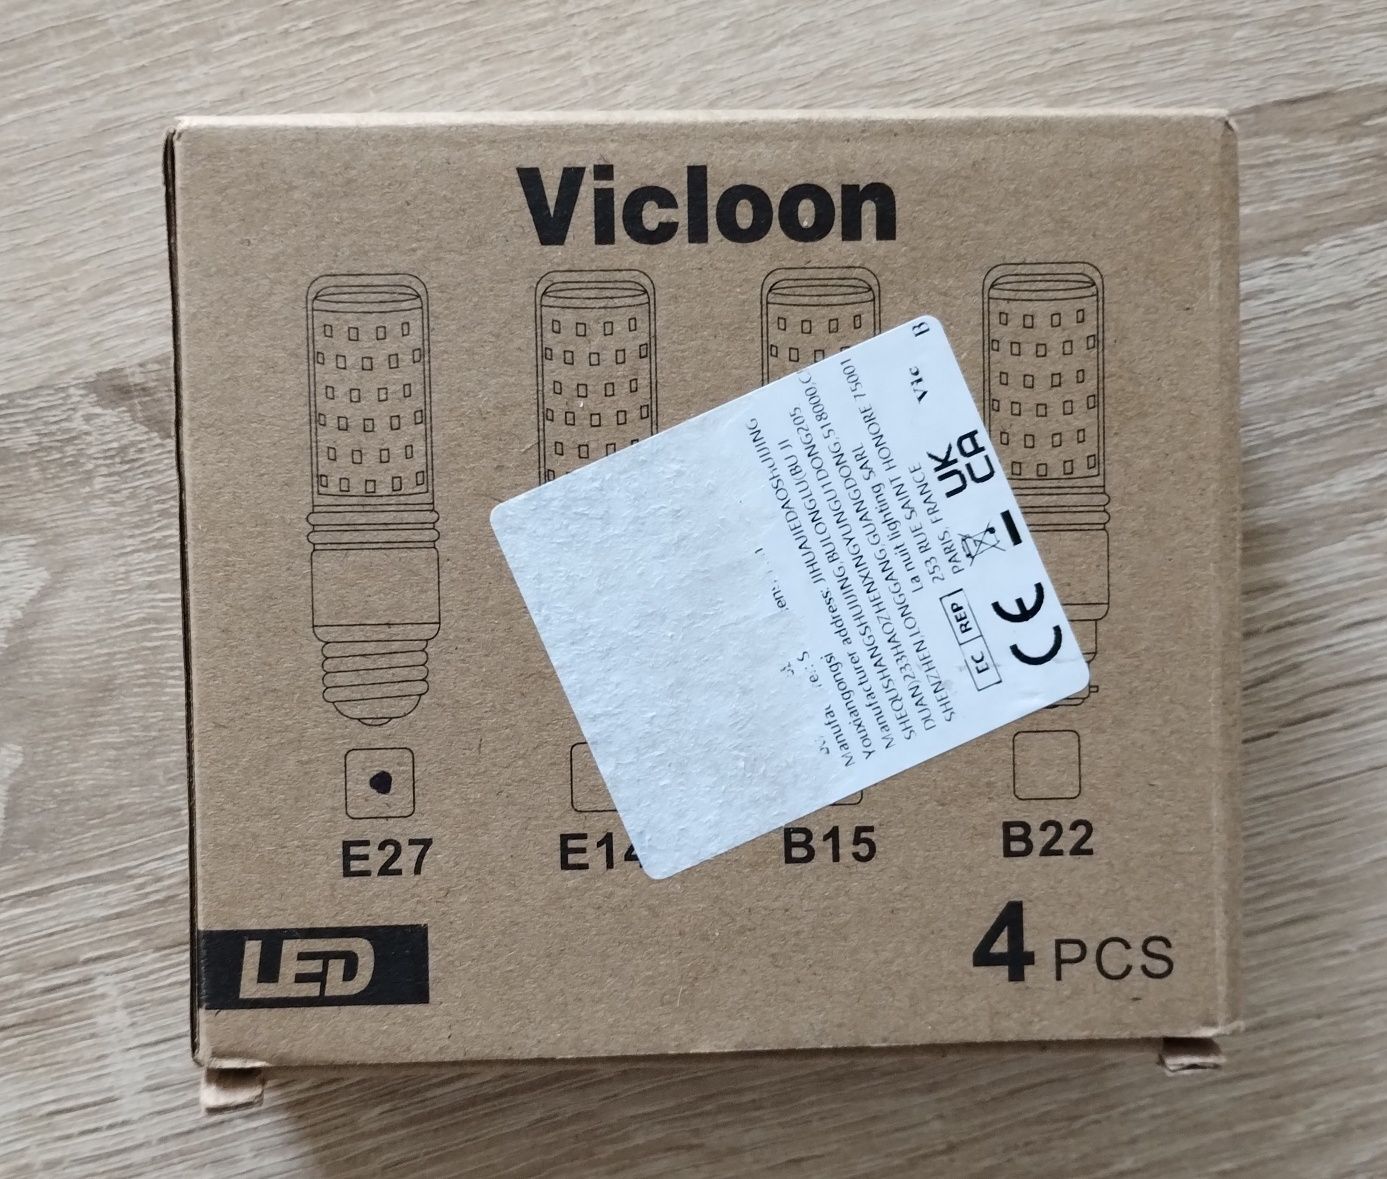 Żarowki LED E27 12W Vicloon